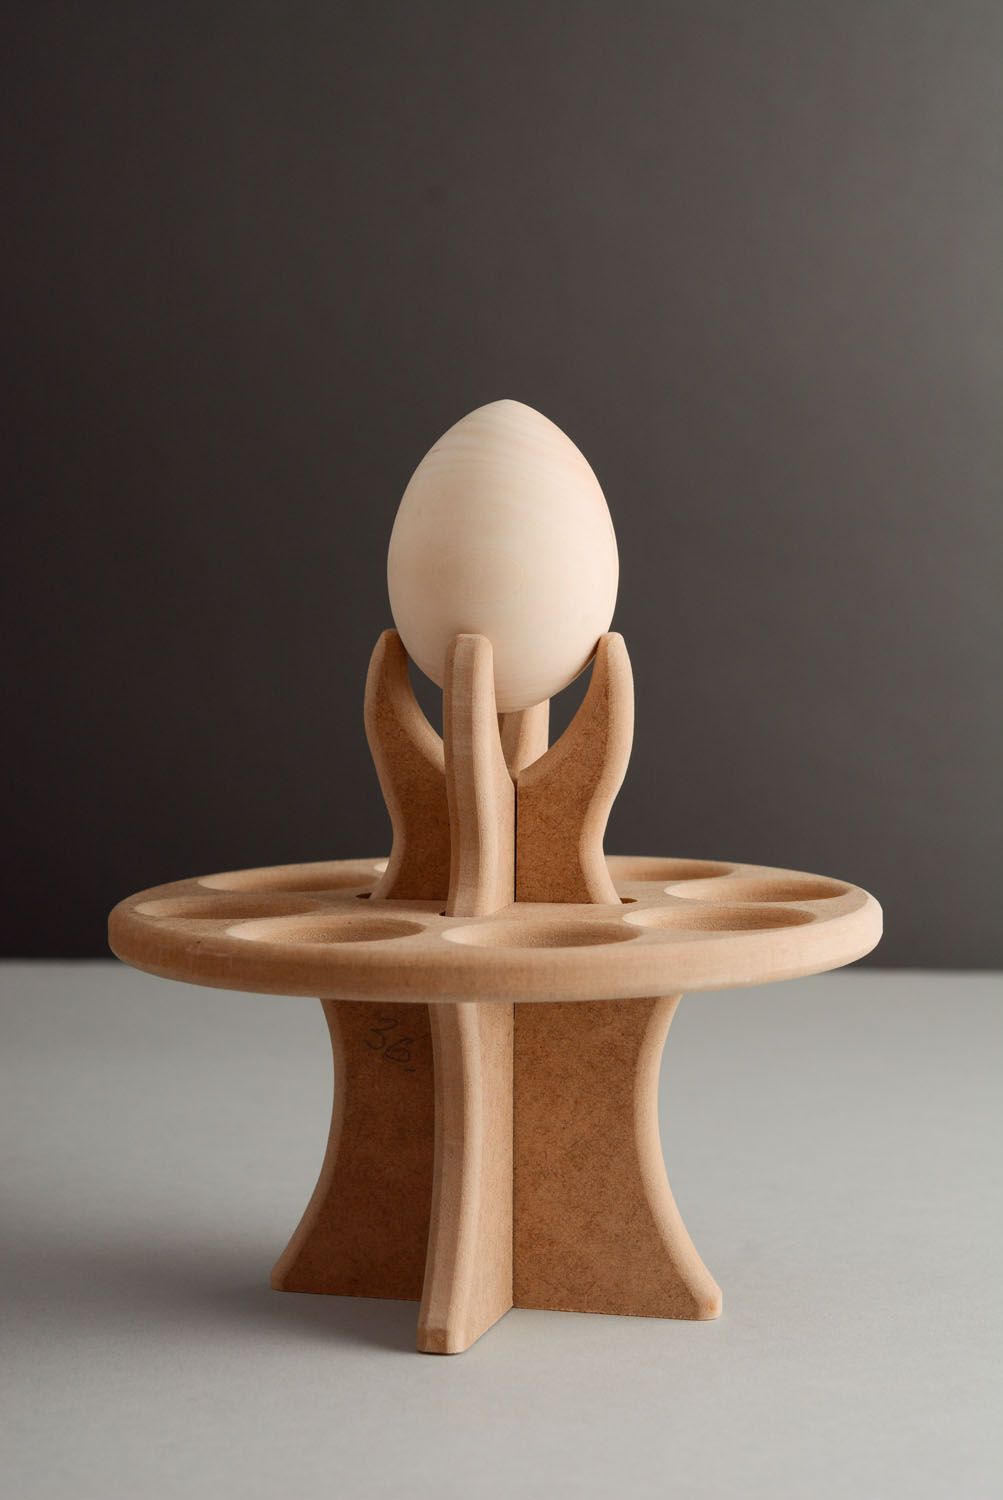 Base de madera para huevos de Pascua foto 1